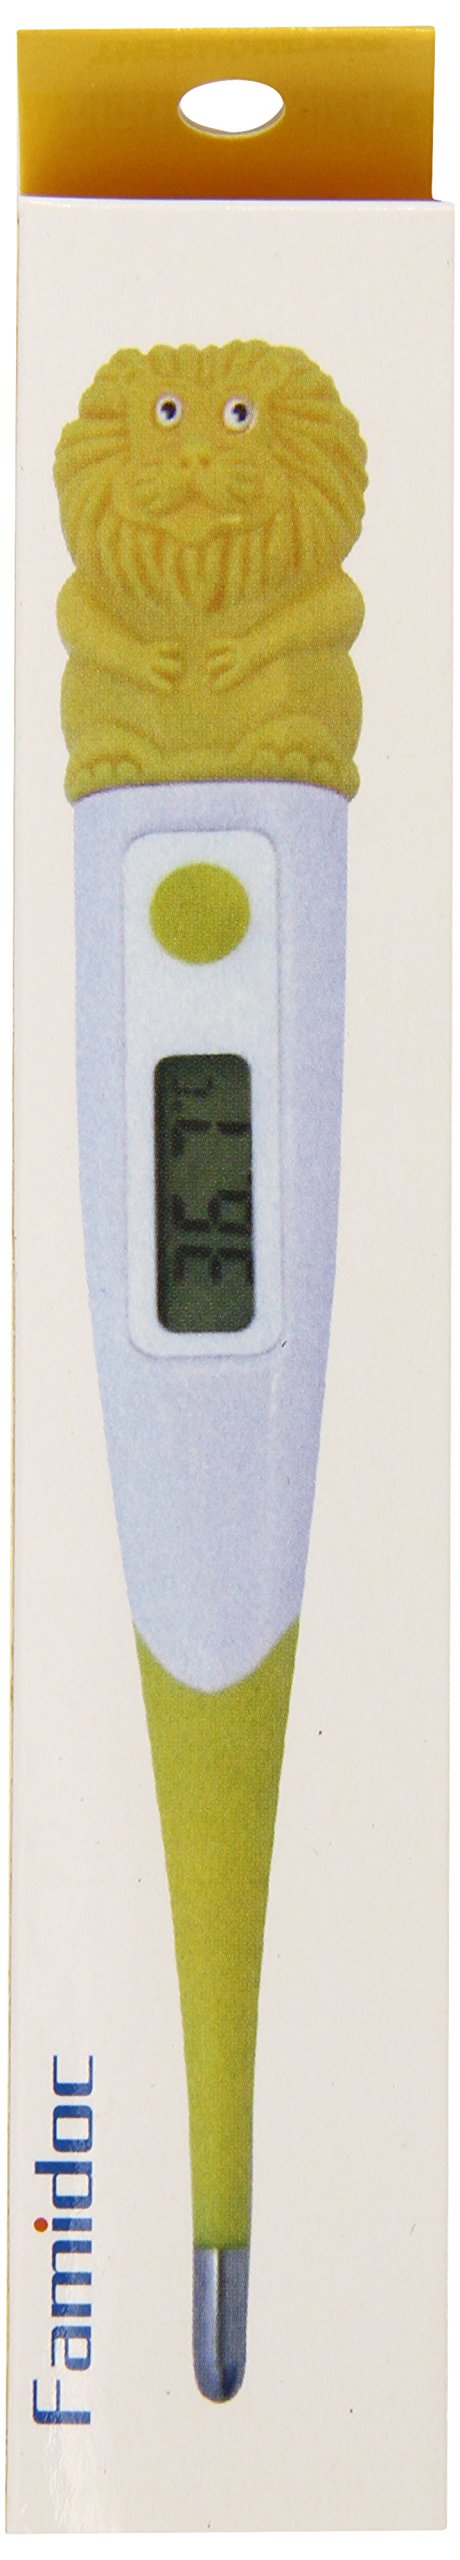 Zoo Animal Digital Pediatric Fever Thermometer for Children, Lion